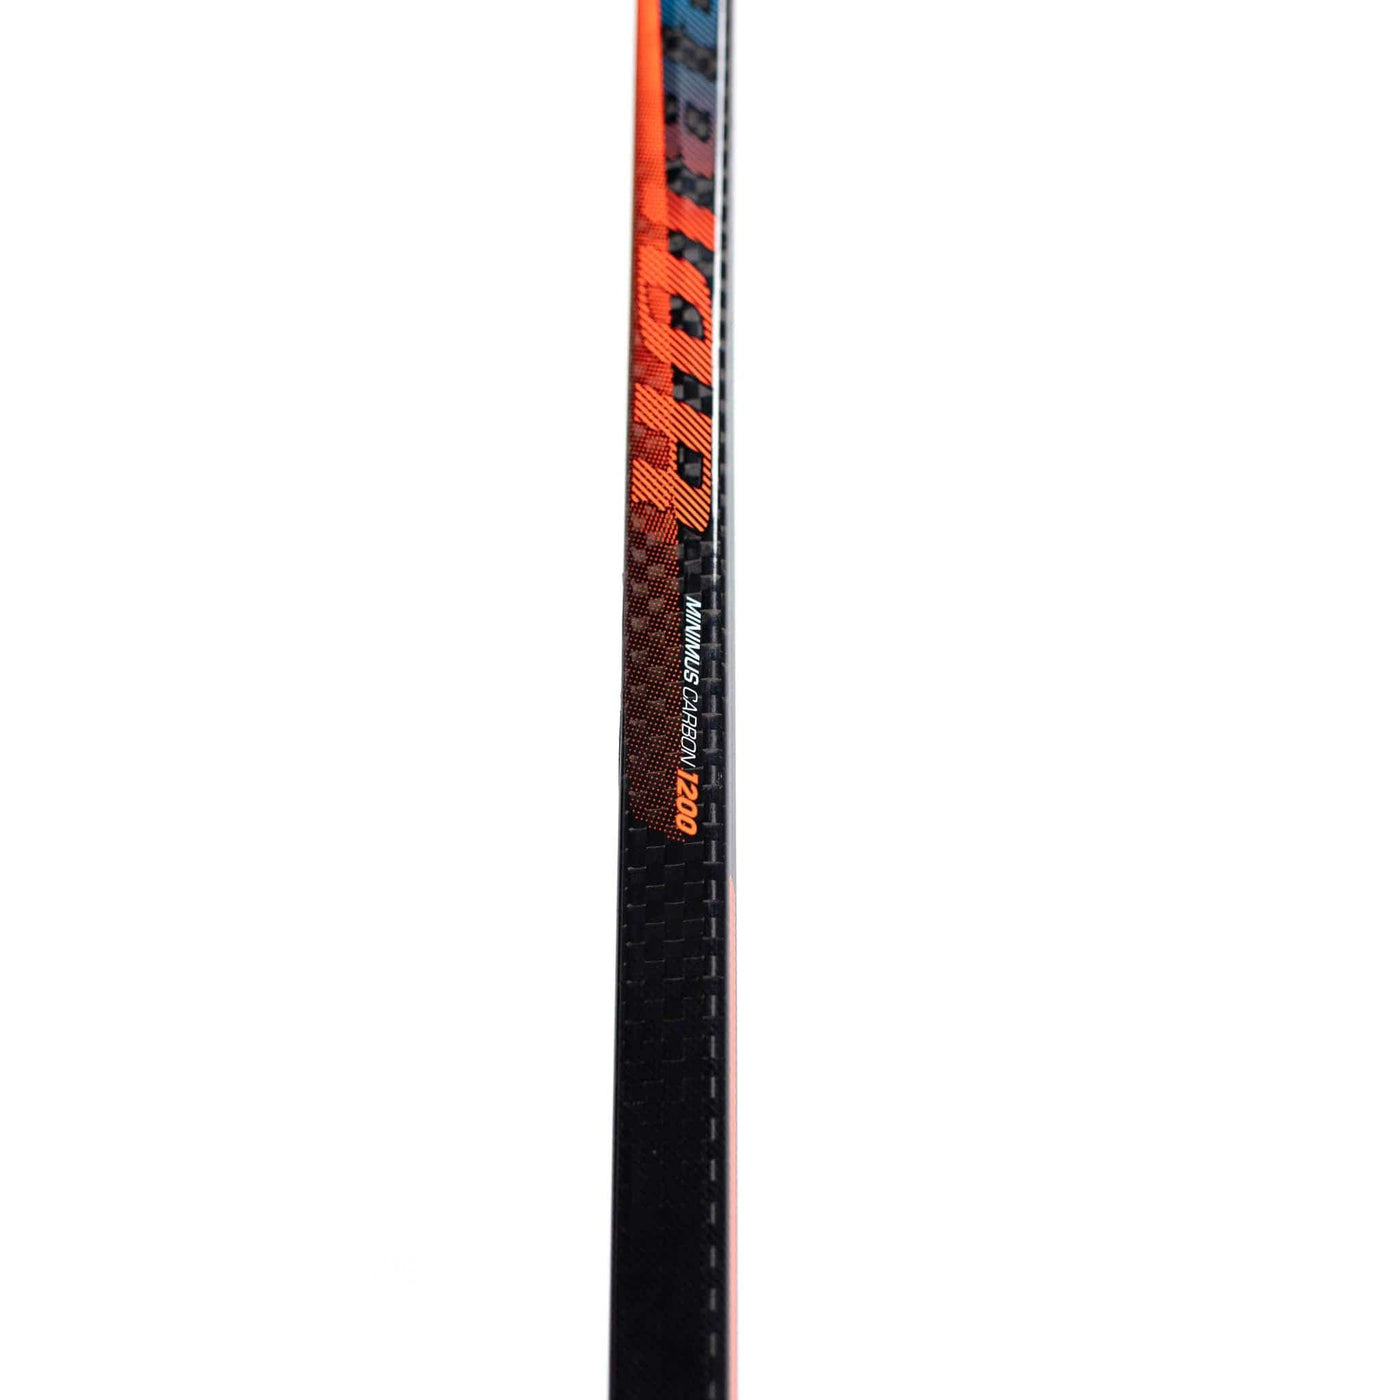 Warrior Covert QR Edge Intermediate Hockey Stick